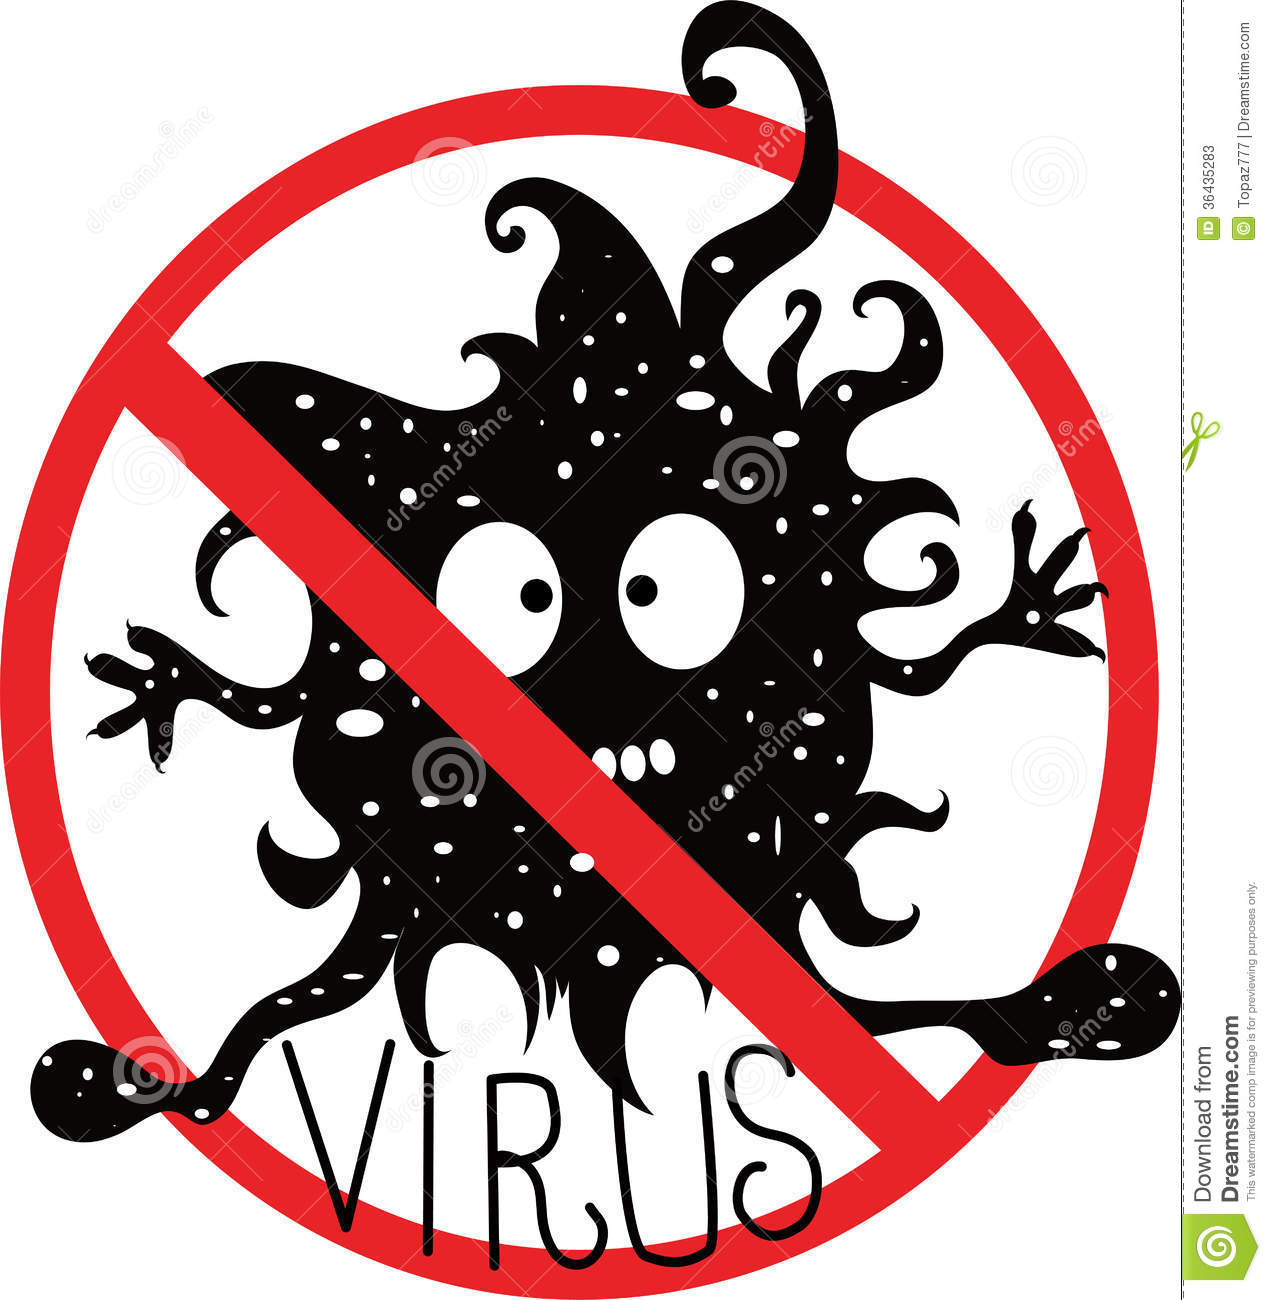 Vaccination Clip Art Virus Stock Photos